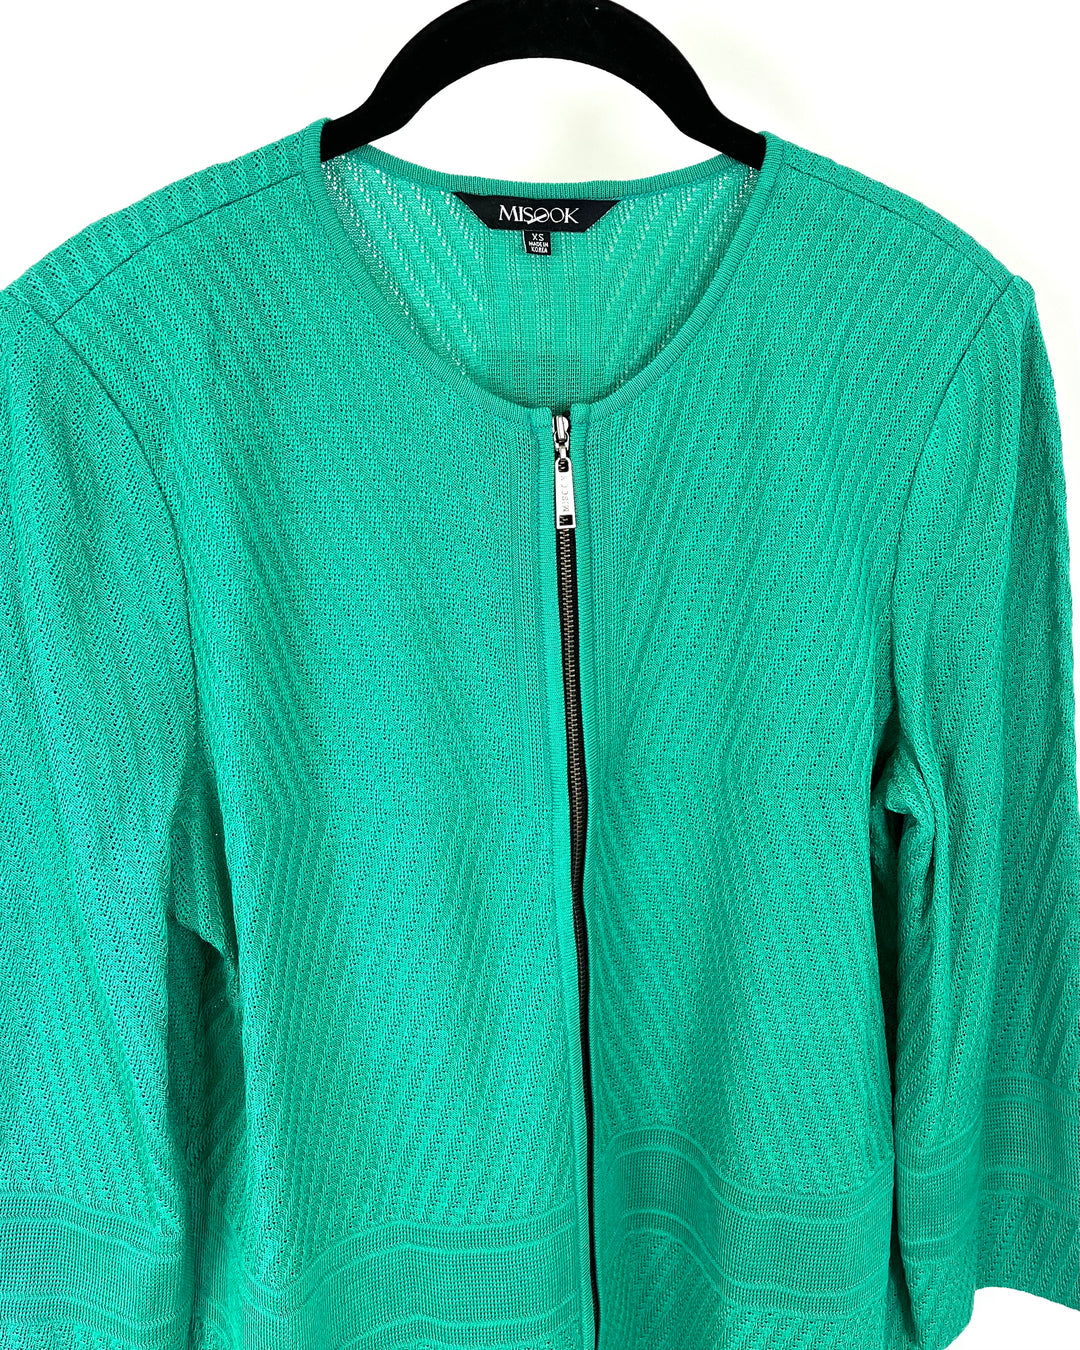 Bright Mint Green Zip Up Jacket - Size 2-4